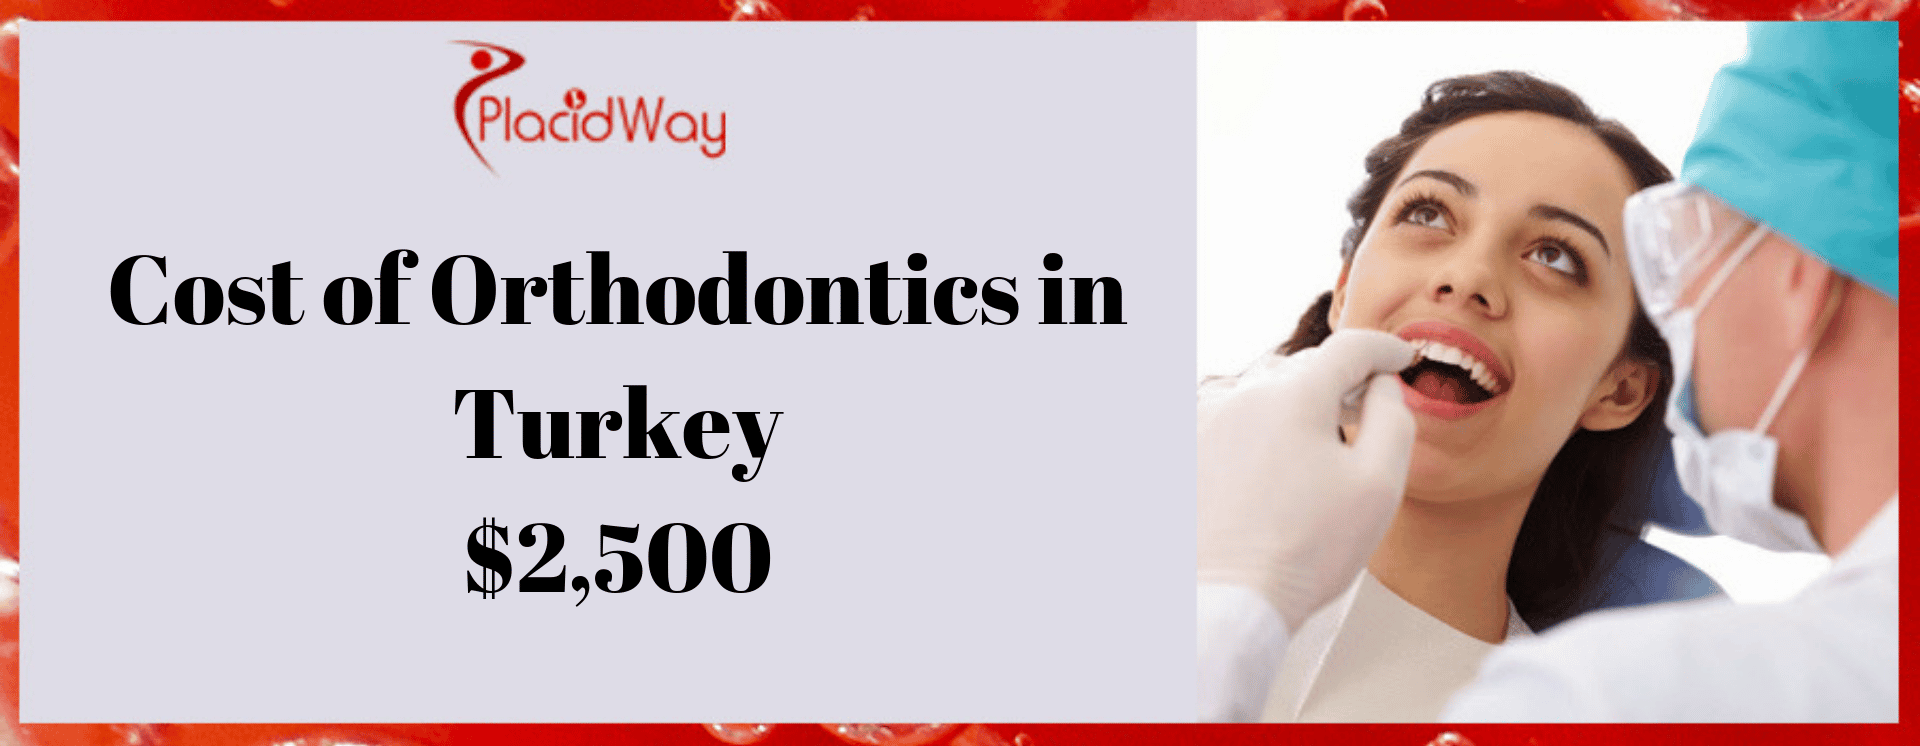 Cost of Orthodontics in Turkey